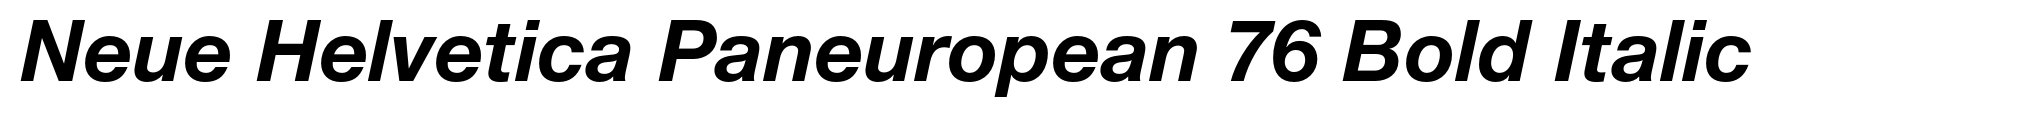 Neue Helvetica Paneuropean 76 Bold Italic image